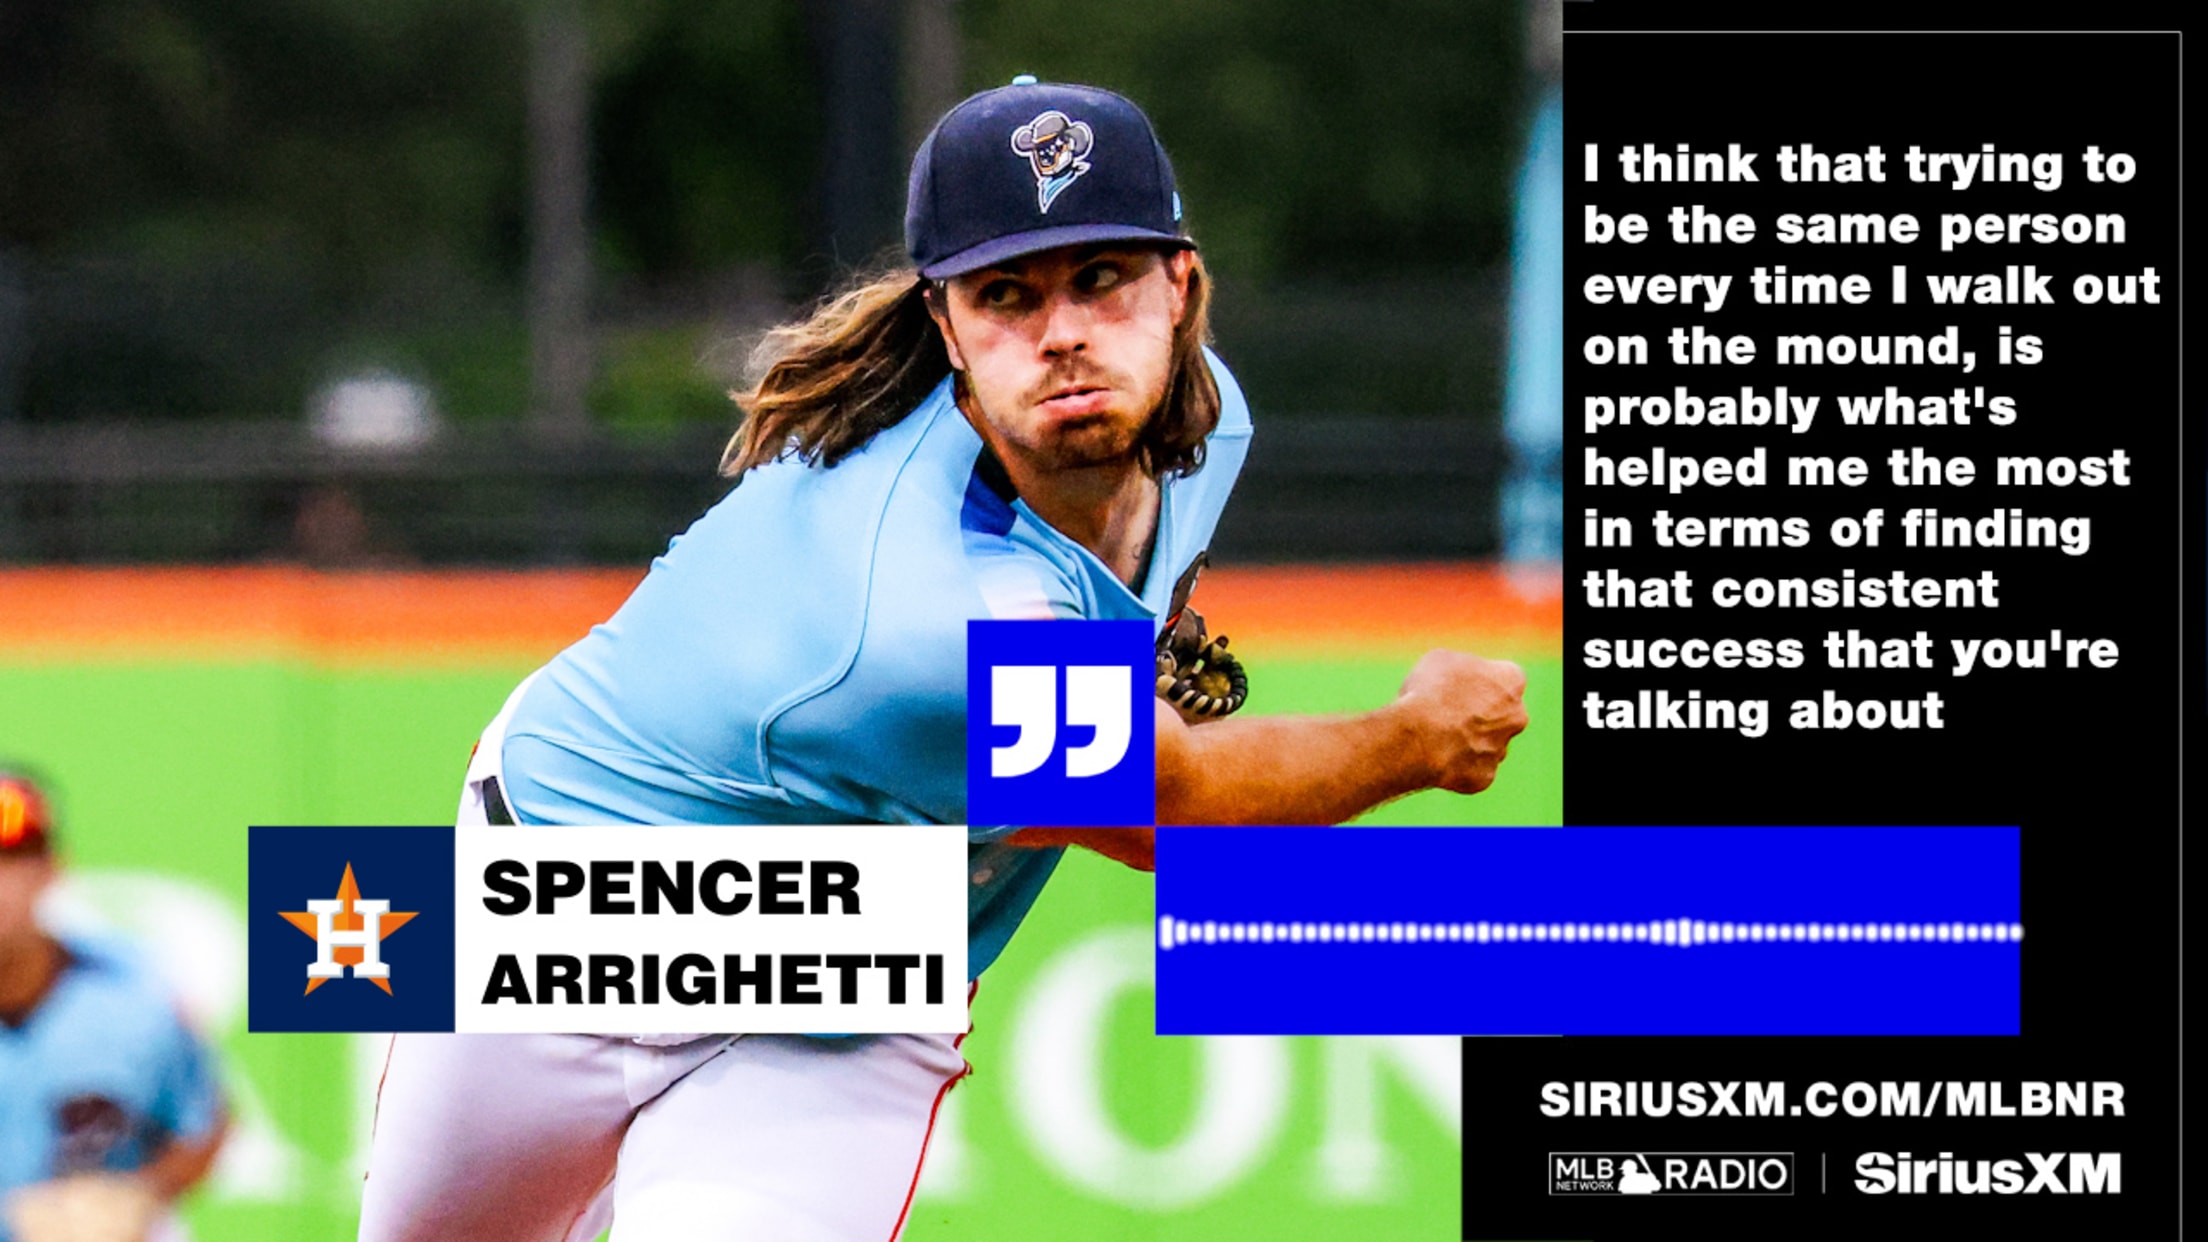 Spencer Arrighetti on his success